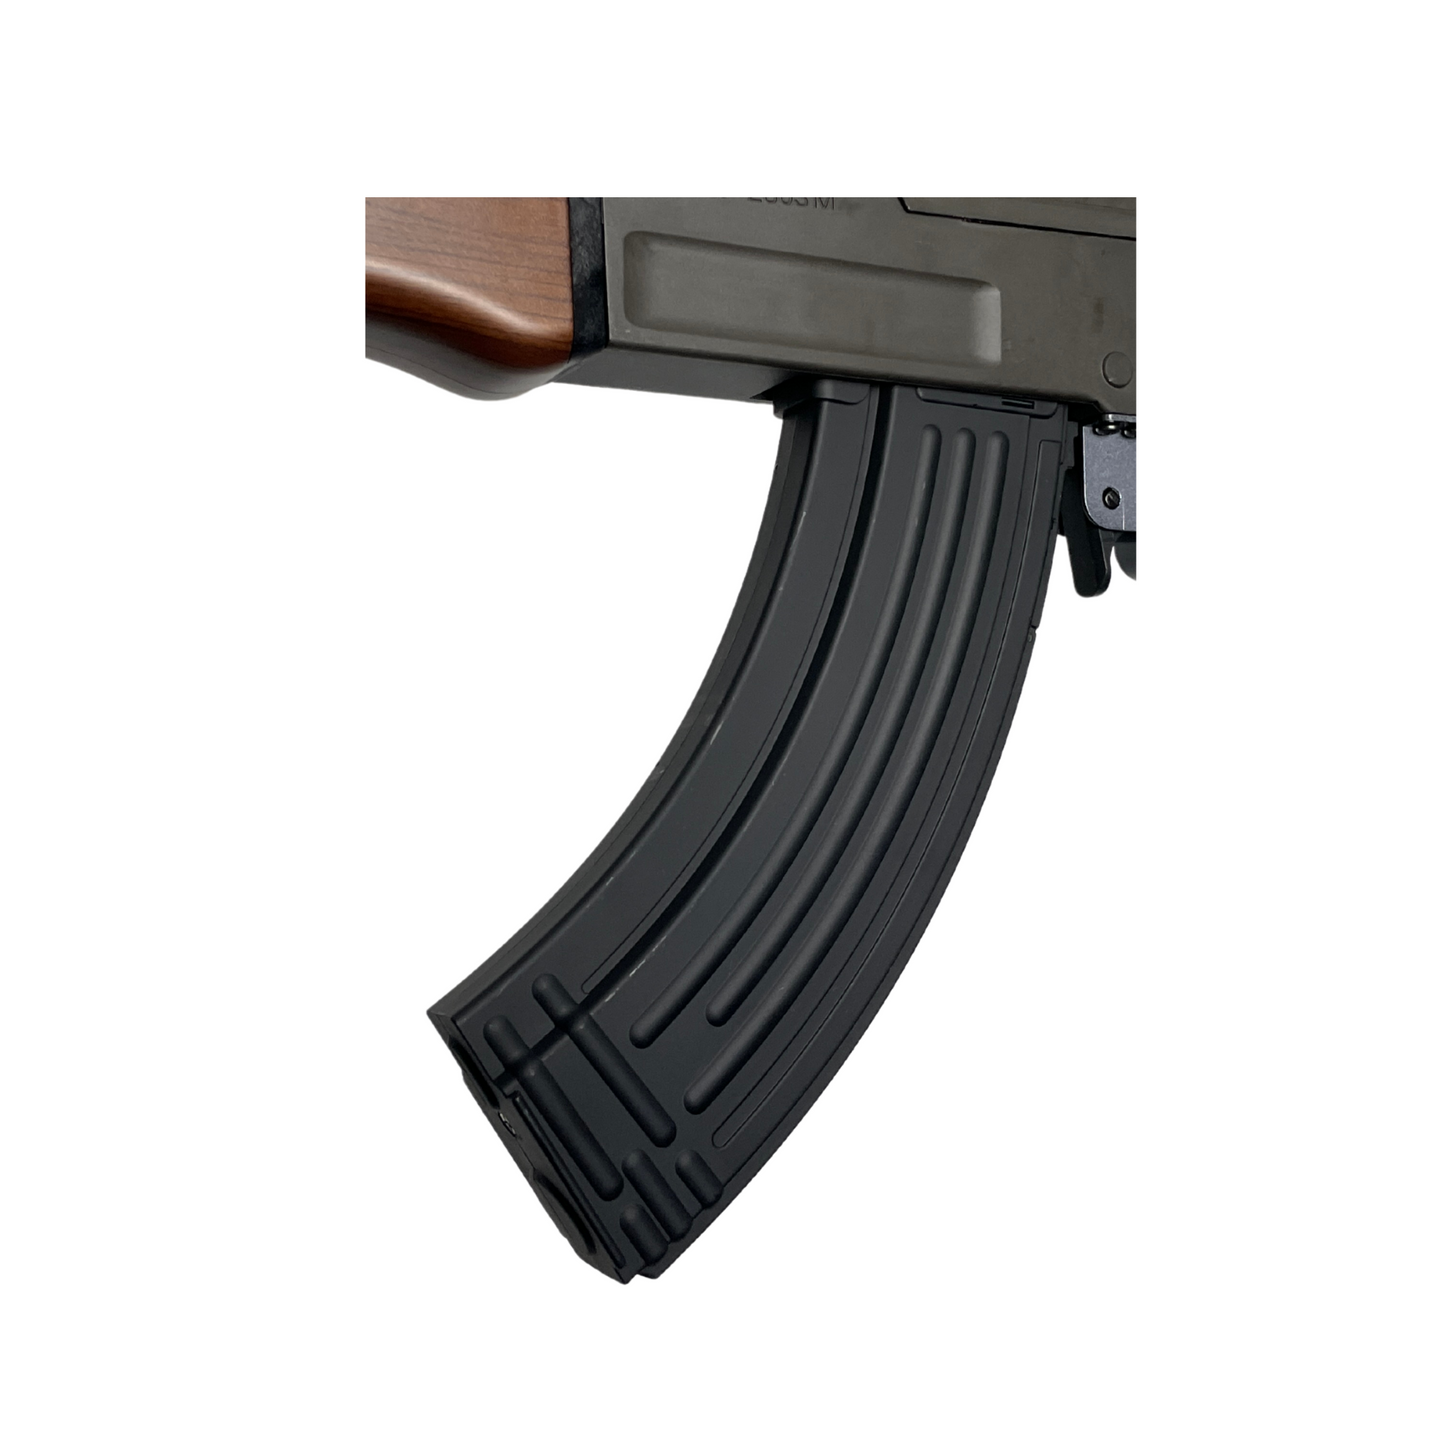 AKM-47 V4 Assault Rifle - Gel Blaster